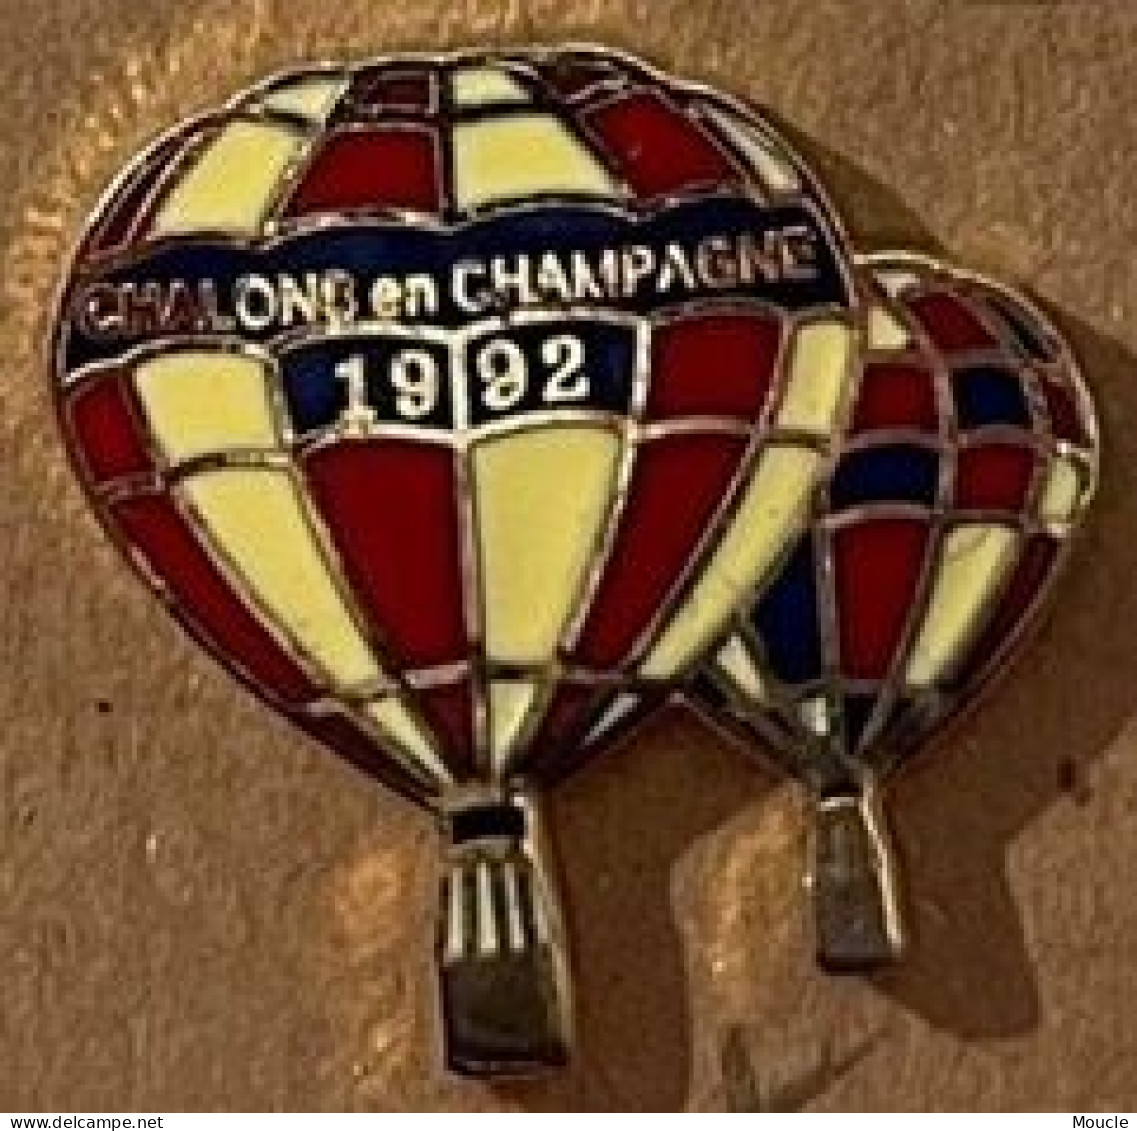 MONTGOLFIERE - BALLOON - BALLON A AIR CHAUD - CHALONS EN CHAMPAGNE 1992 -             (33) - Fesselballons